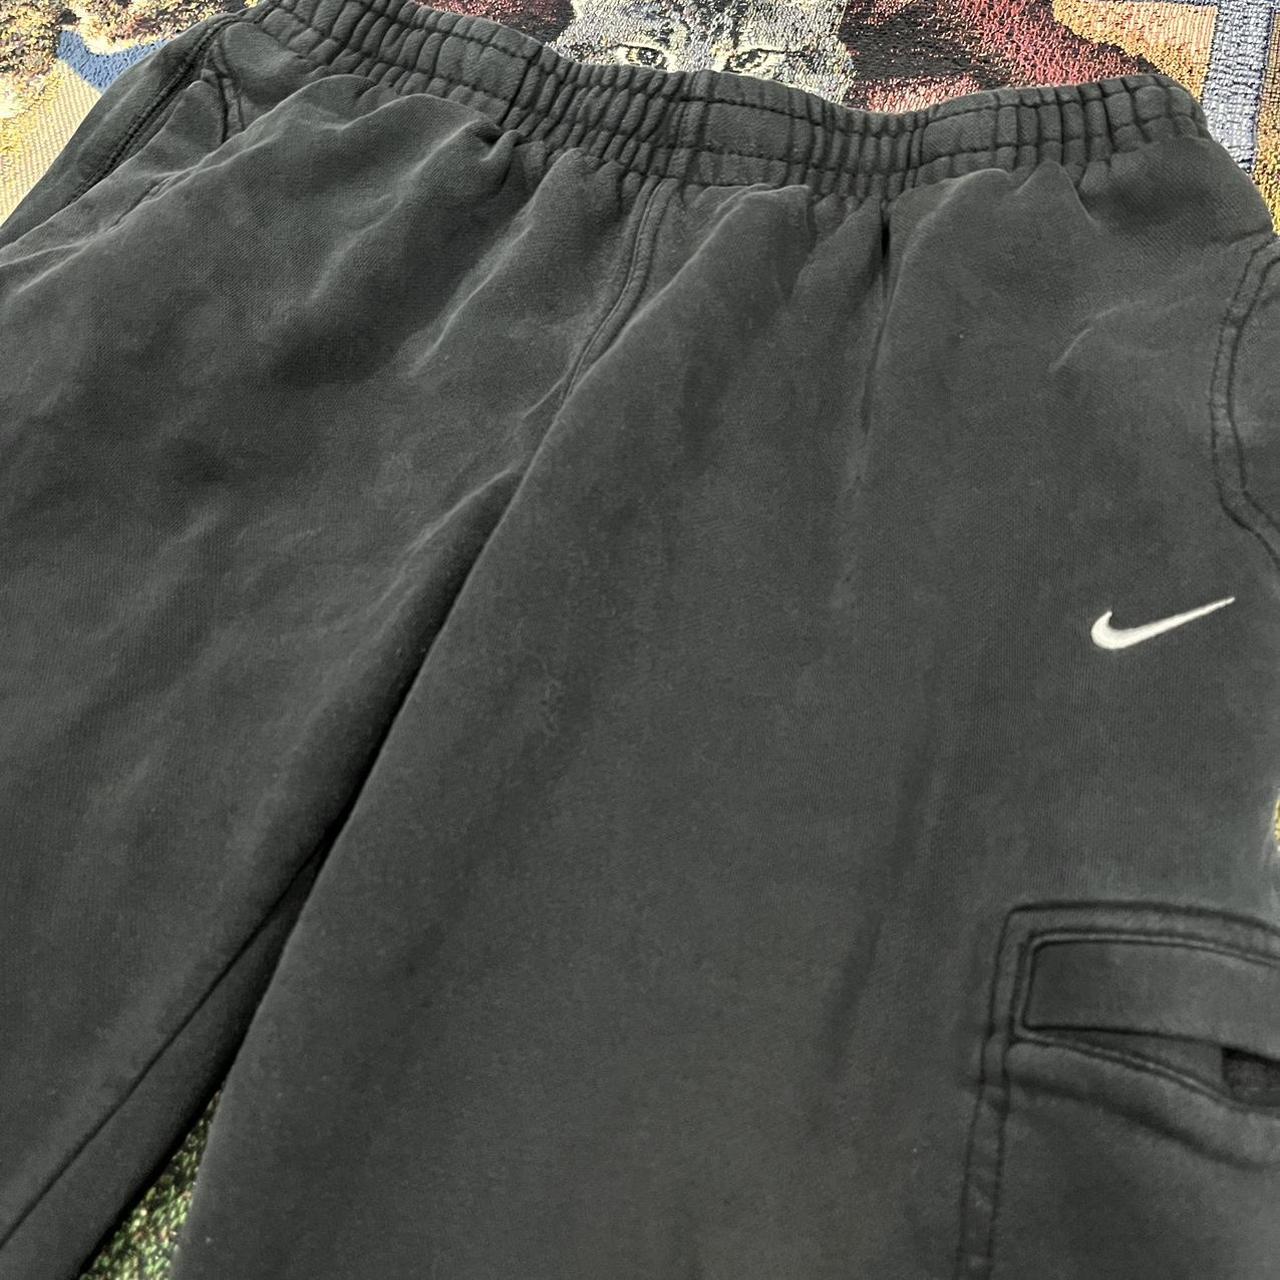 Black nike cargo sweatpants size medium. 29 inseam